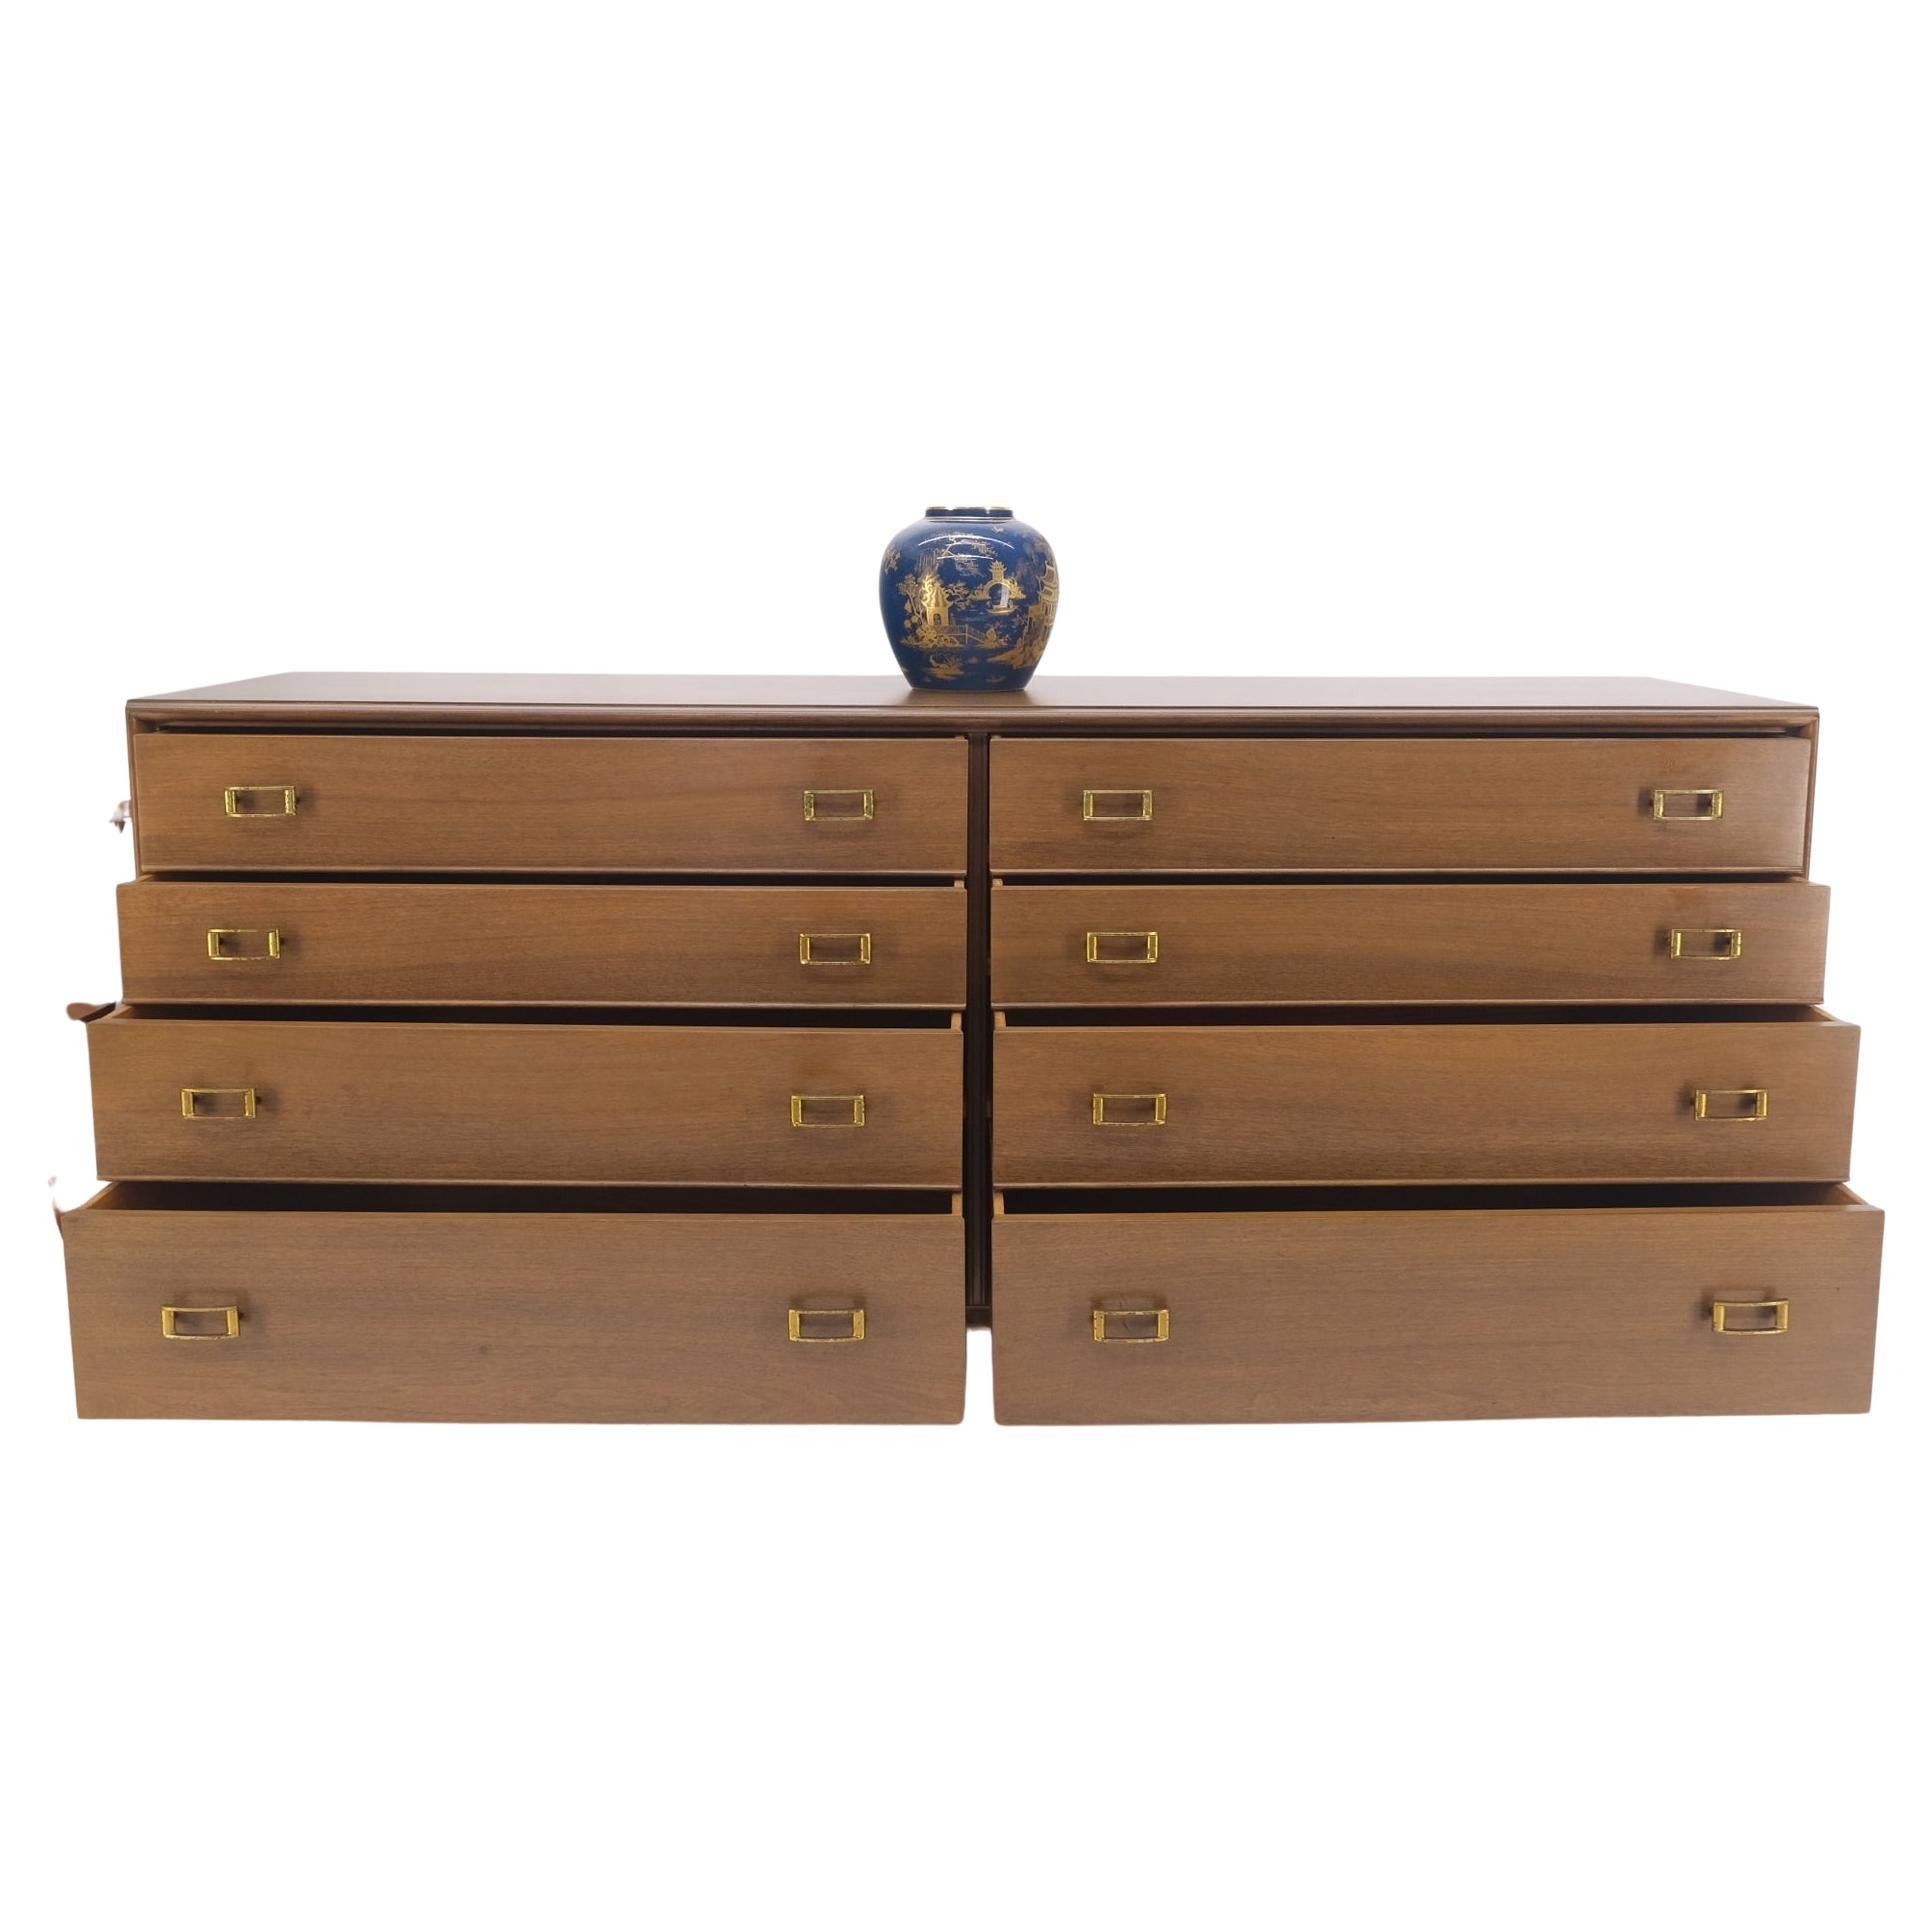 Paul Frankl Johnson Furniture Long 8 Drawers Dresser Credenza Buckle Brass Pulls 7